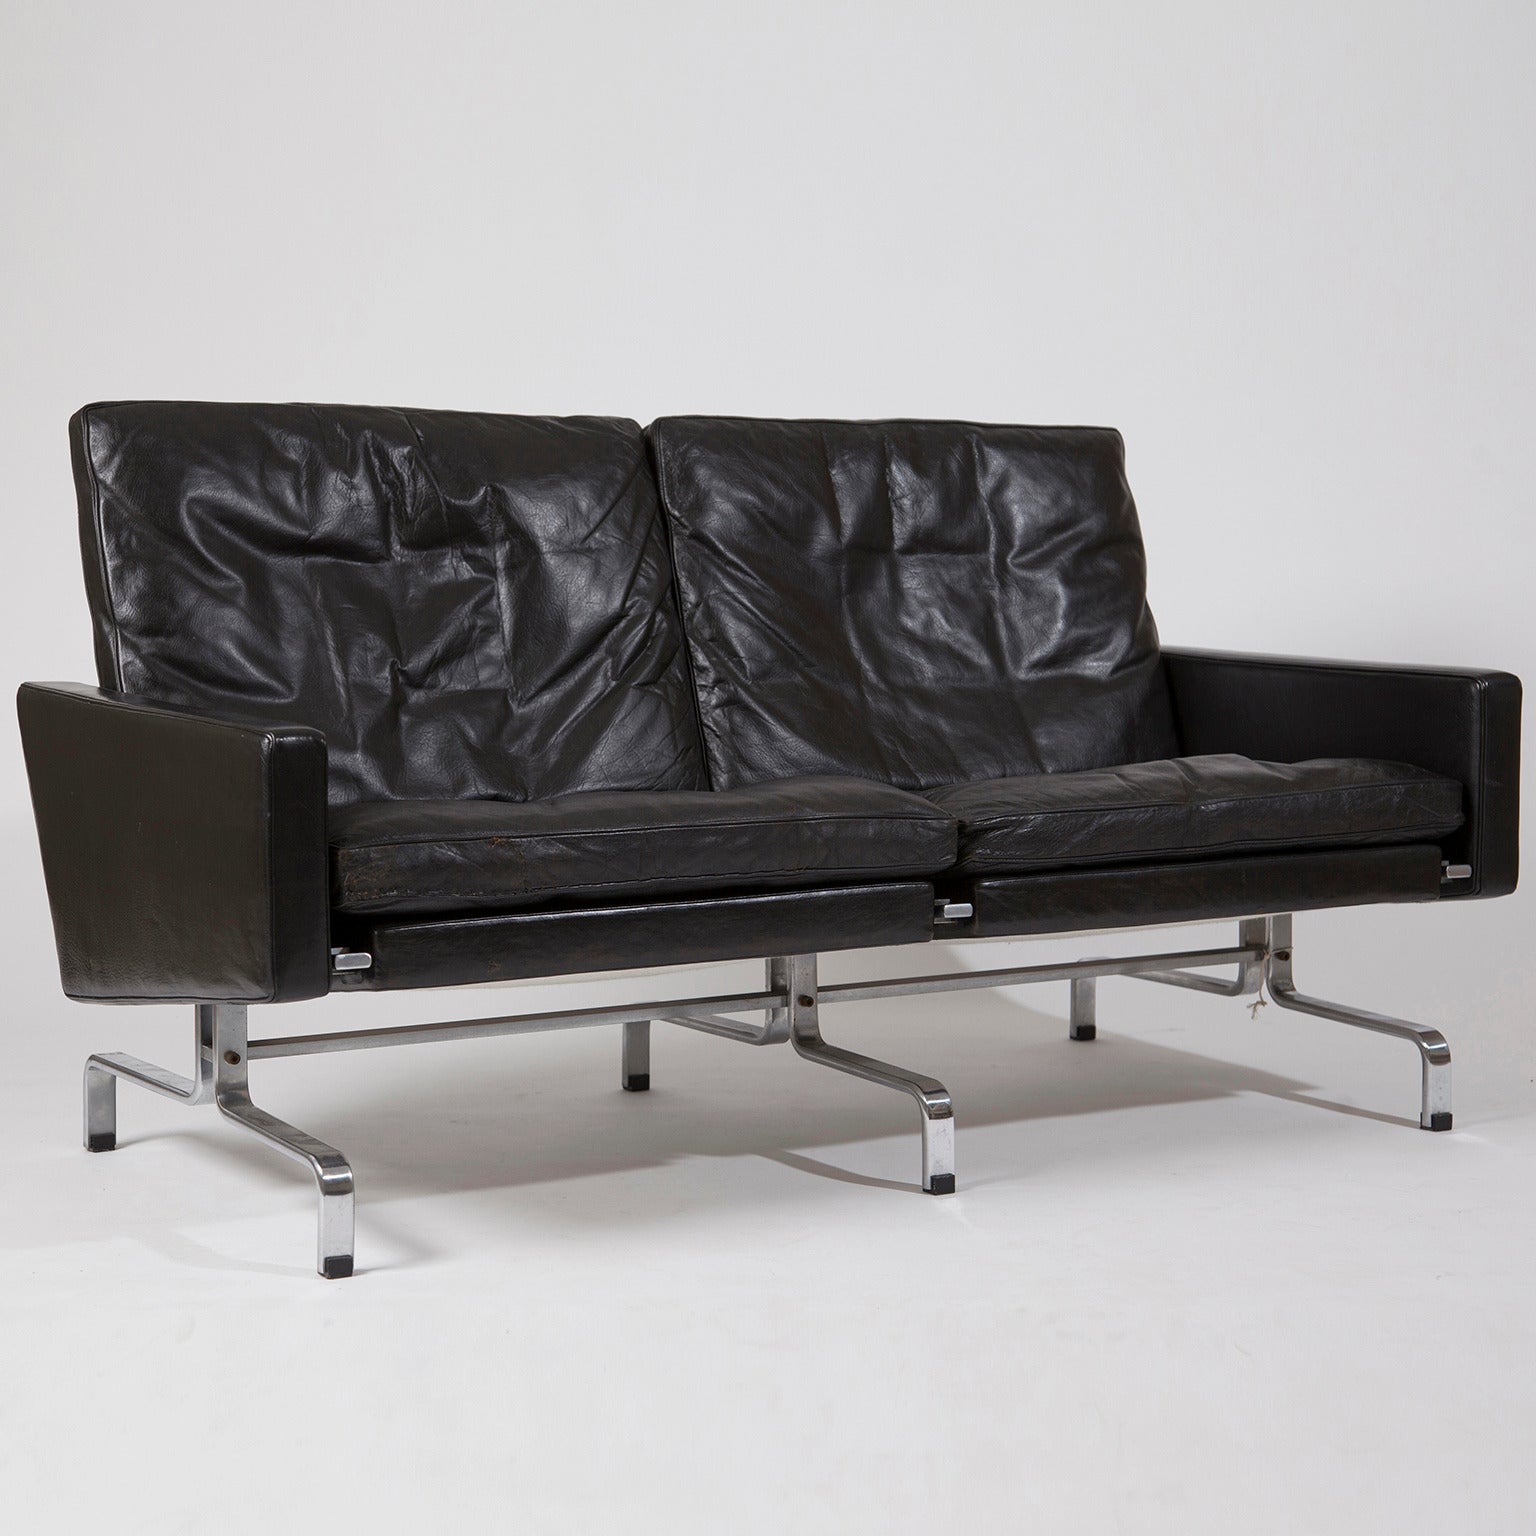 Poul Kjaerholm "PK-31" Sofa For Sale